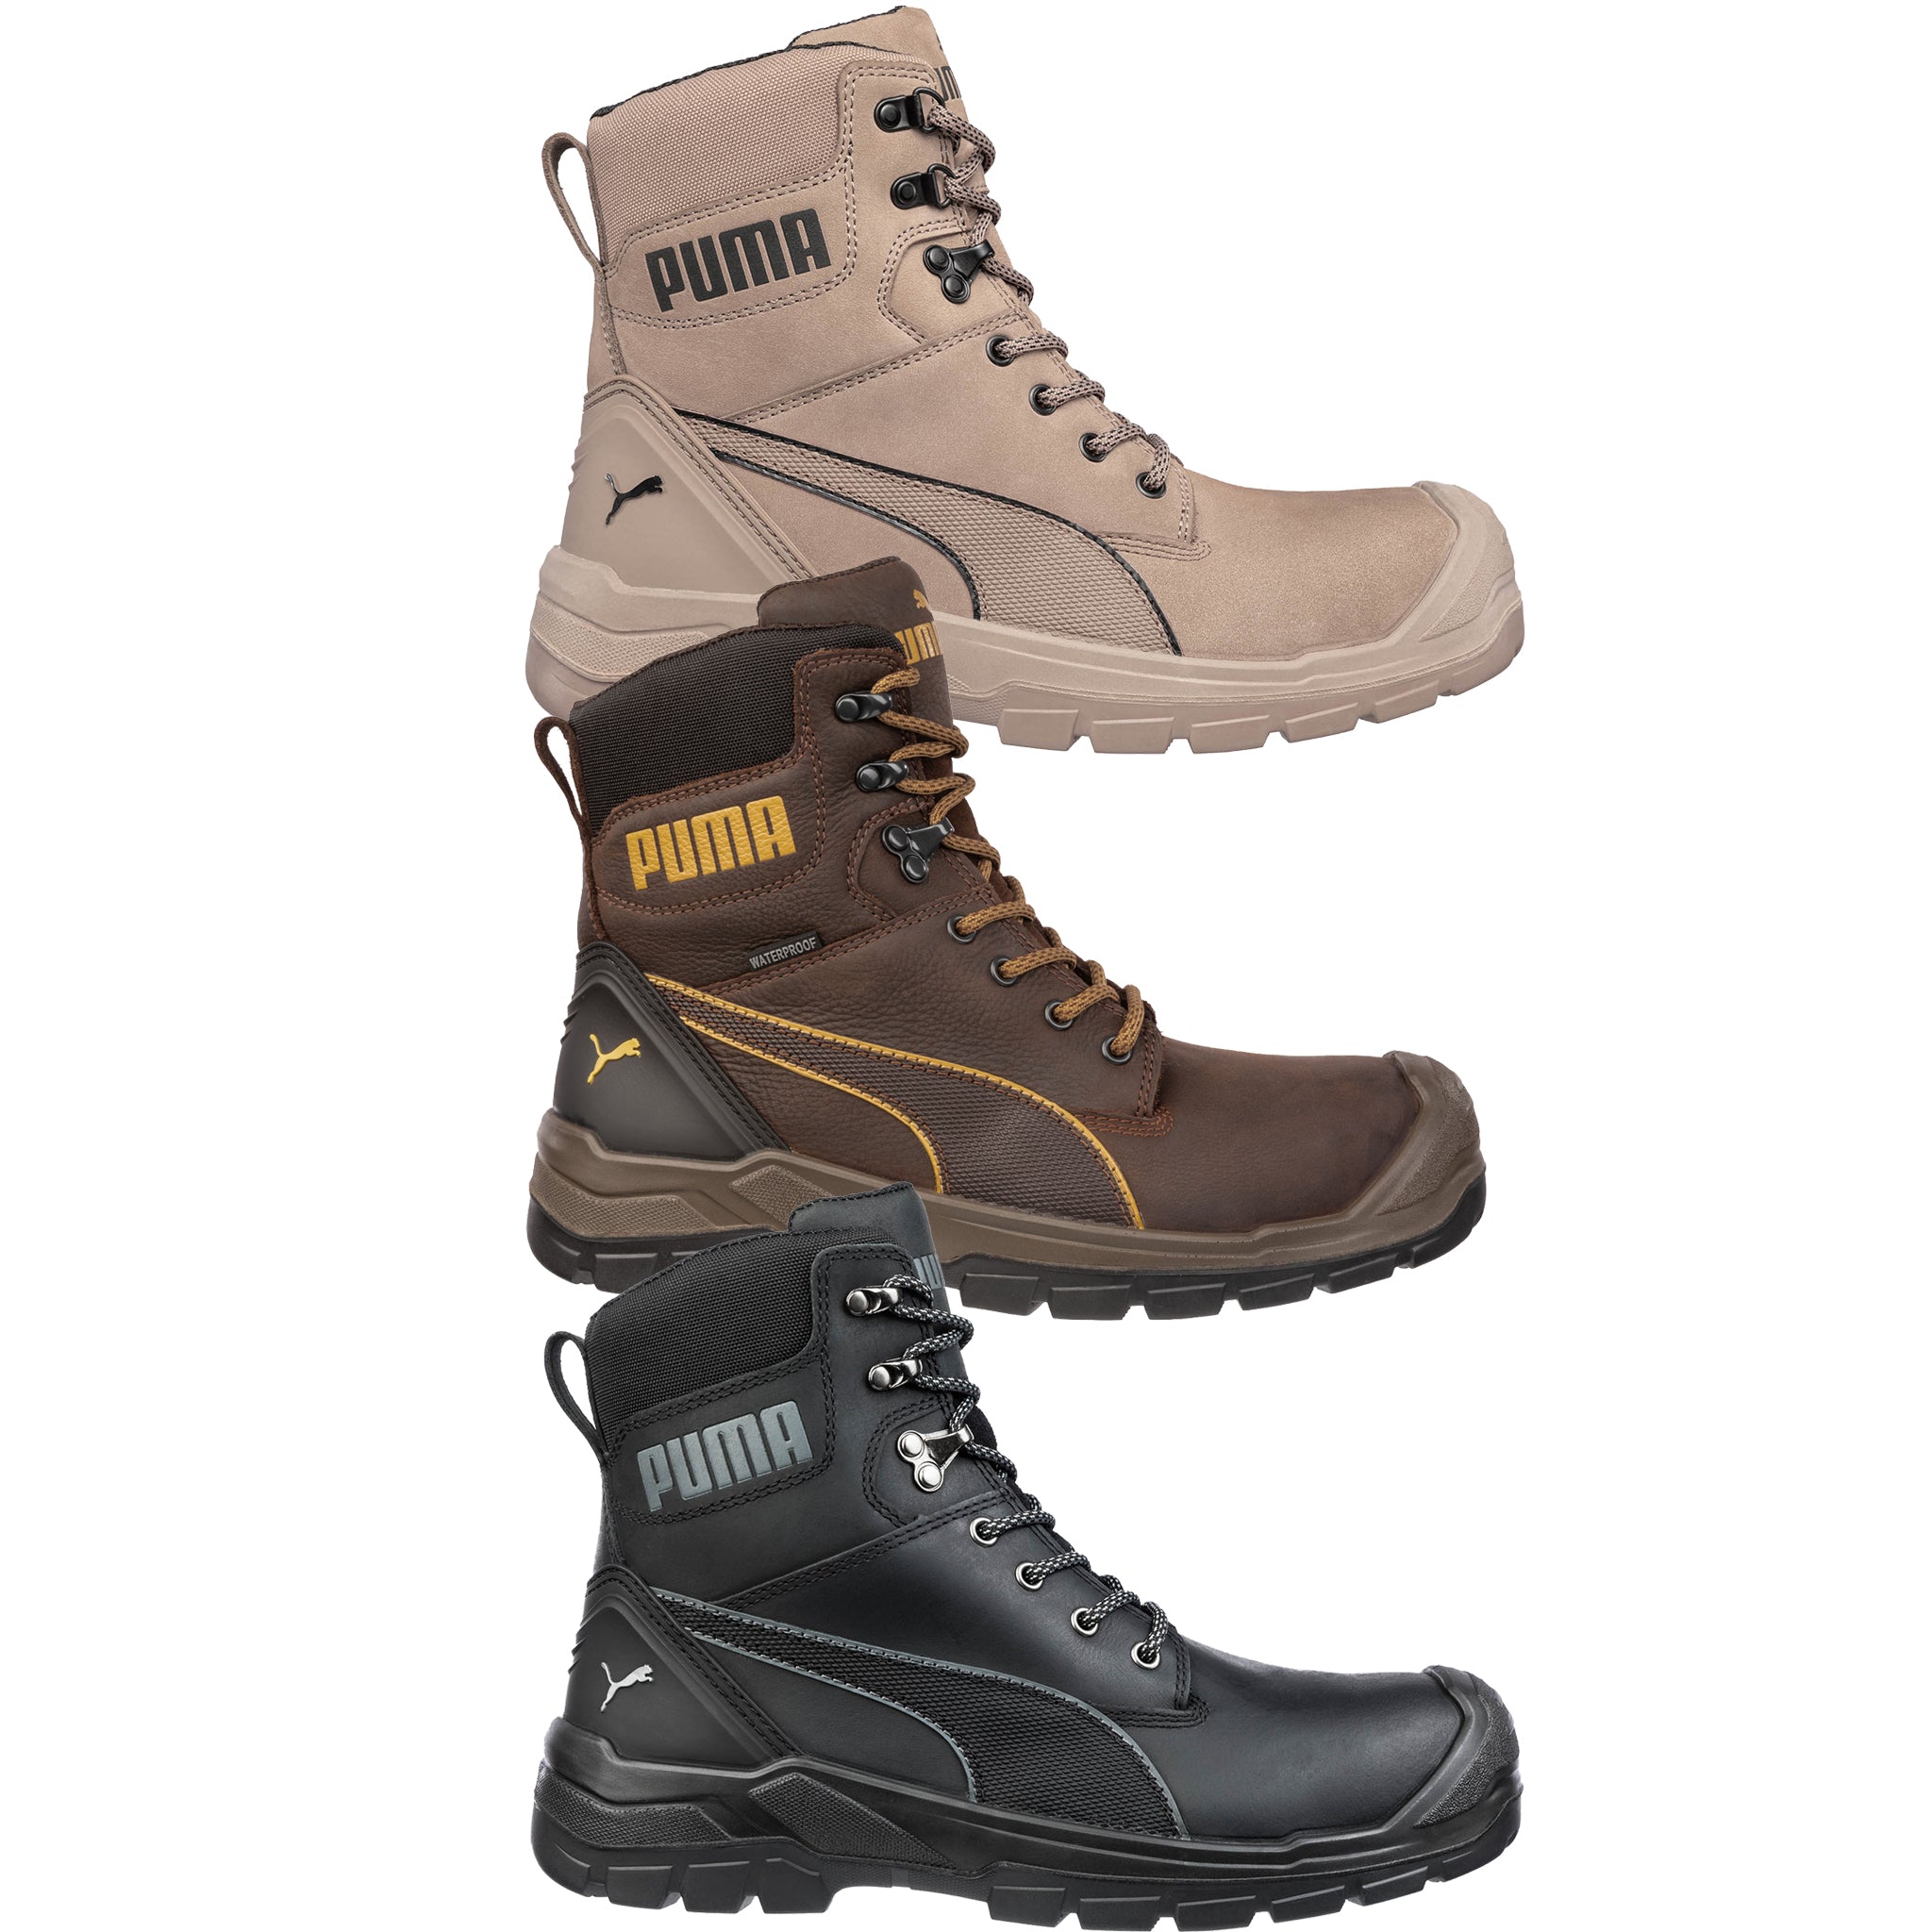 Puma Men's Conquest High EH WP ASTM Composite Toe Boots That Shoe Store More